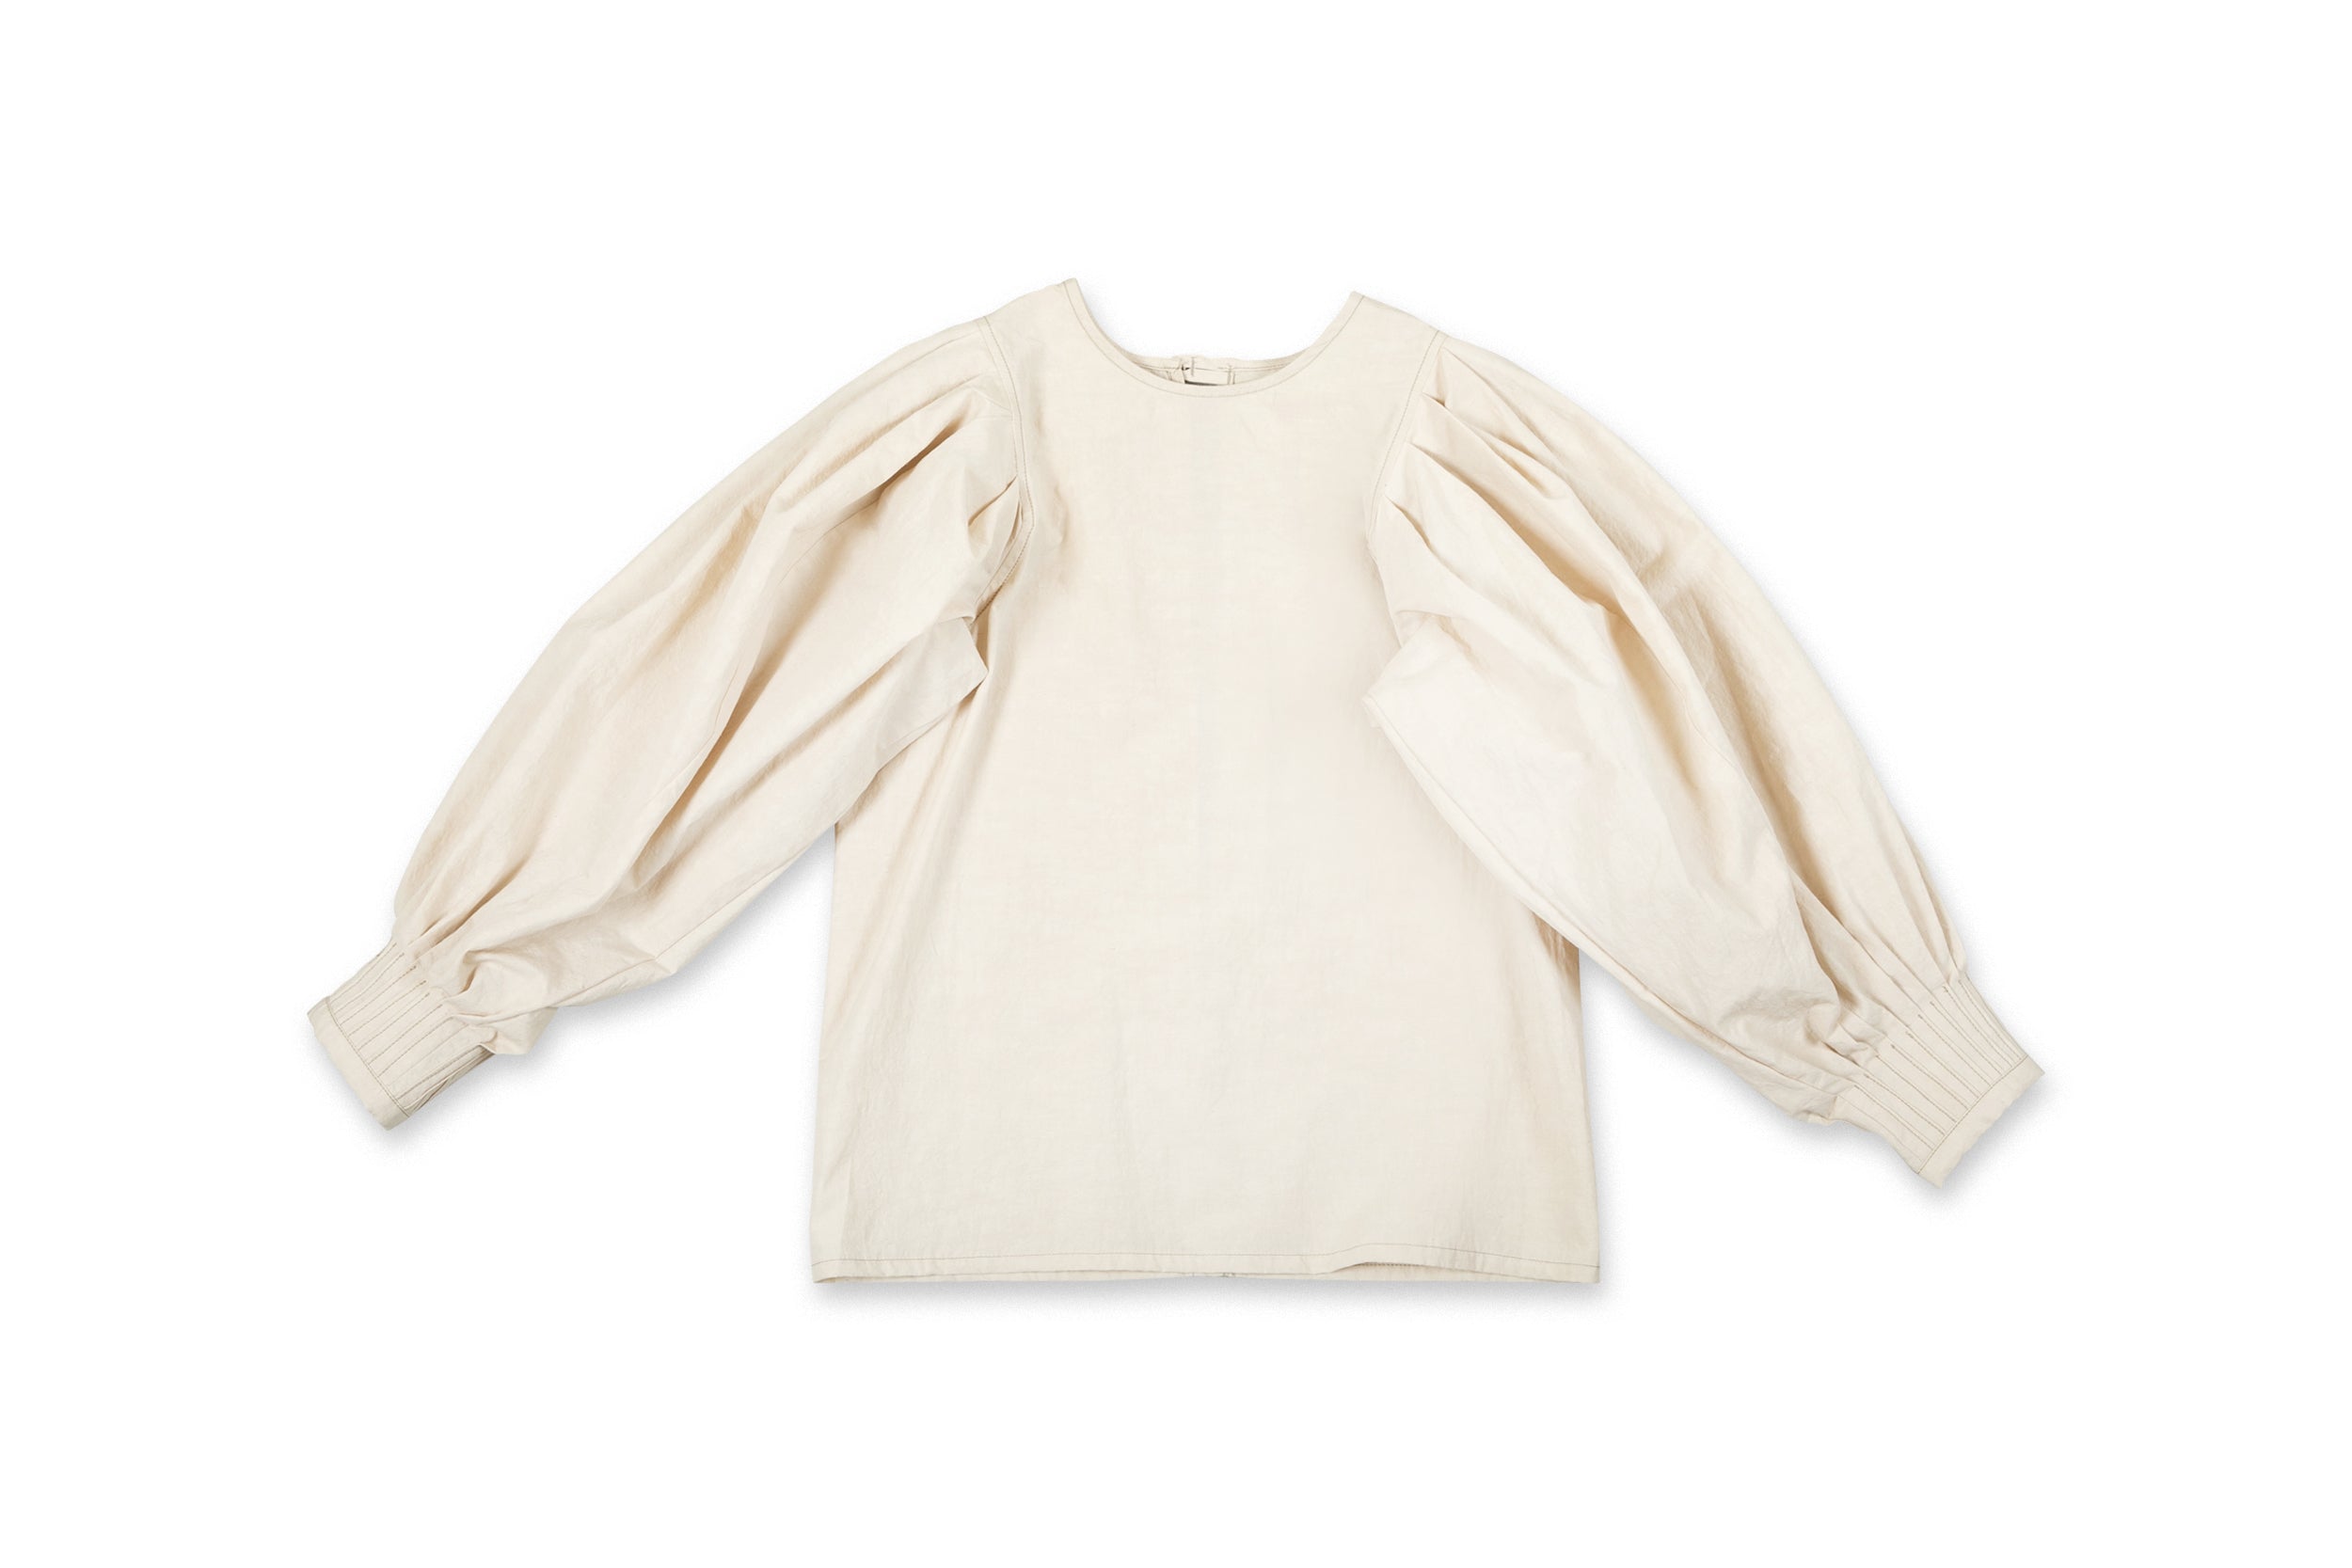 Cotton hemp blouse